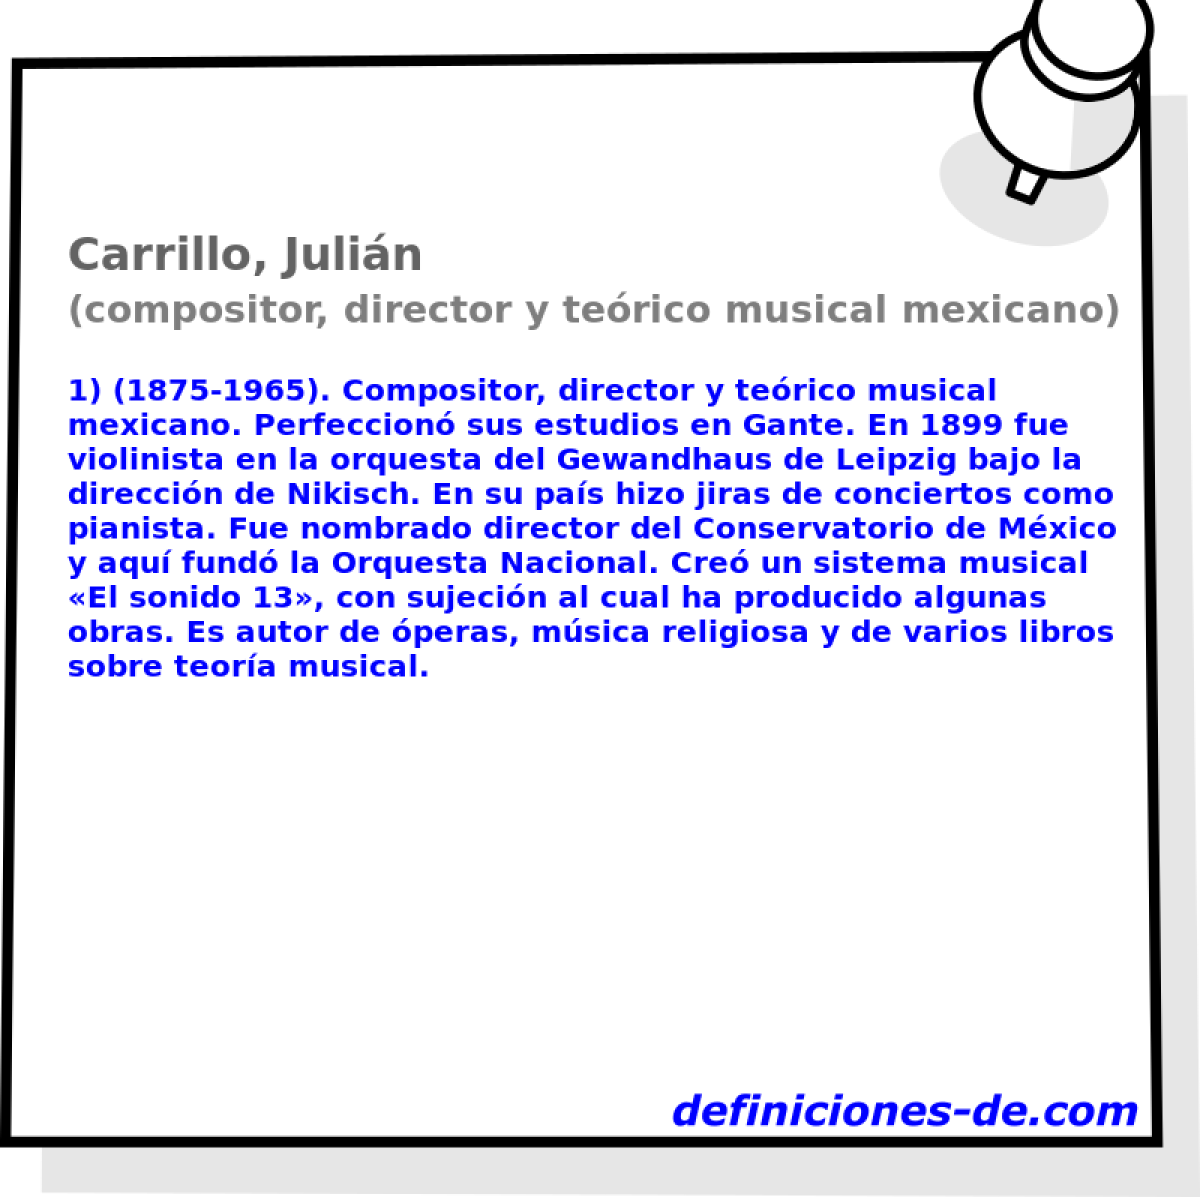 Carrillo, Julin (compositor, director y terico musical mexicano)